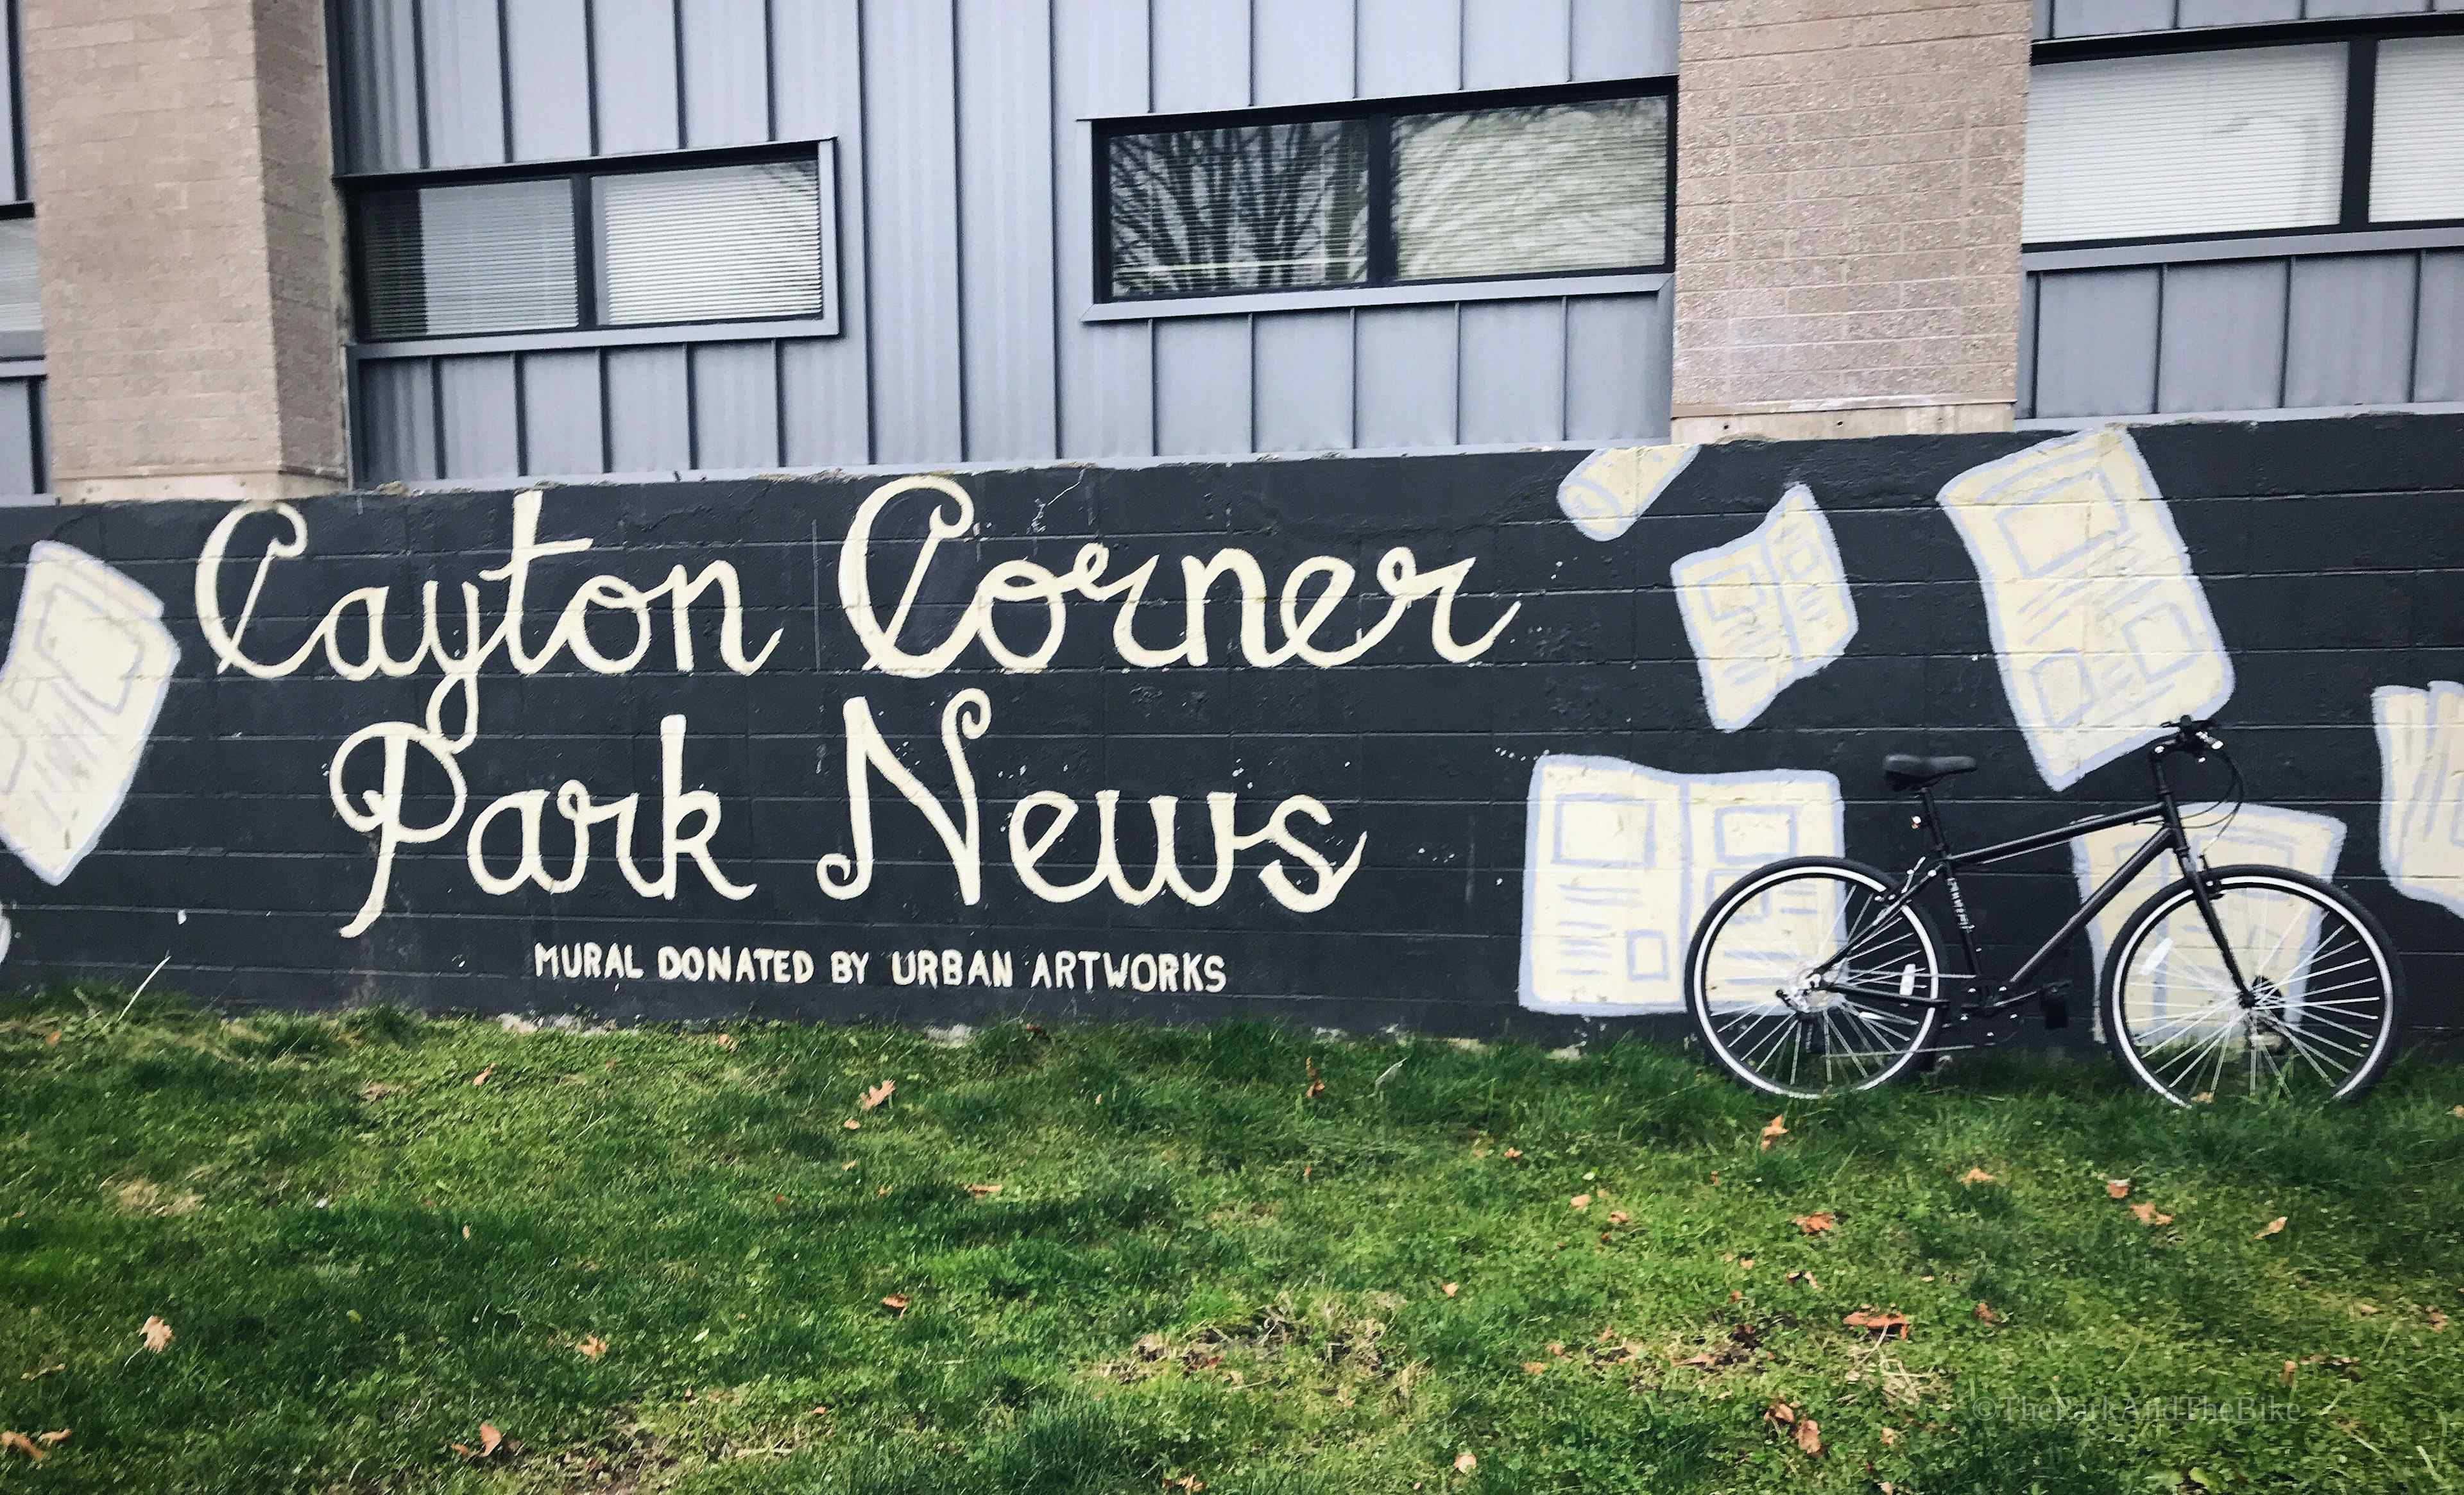 image of Cayton Corner Park